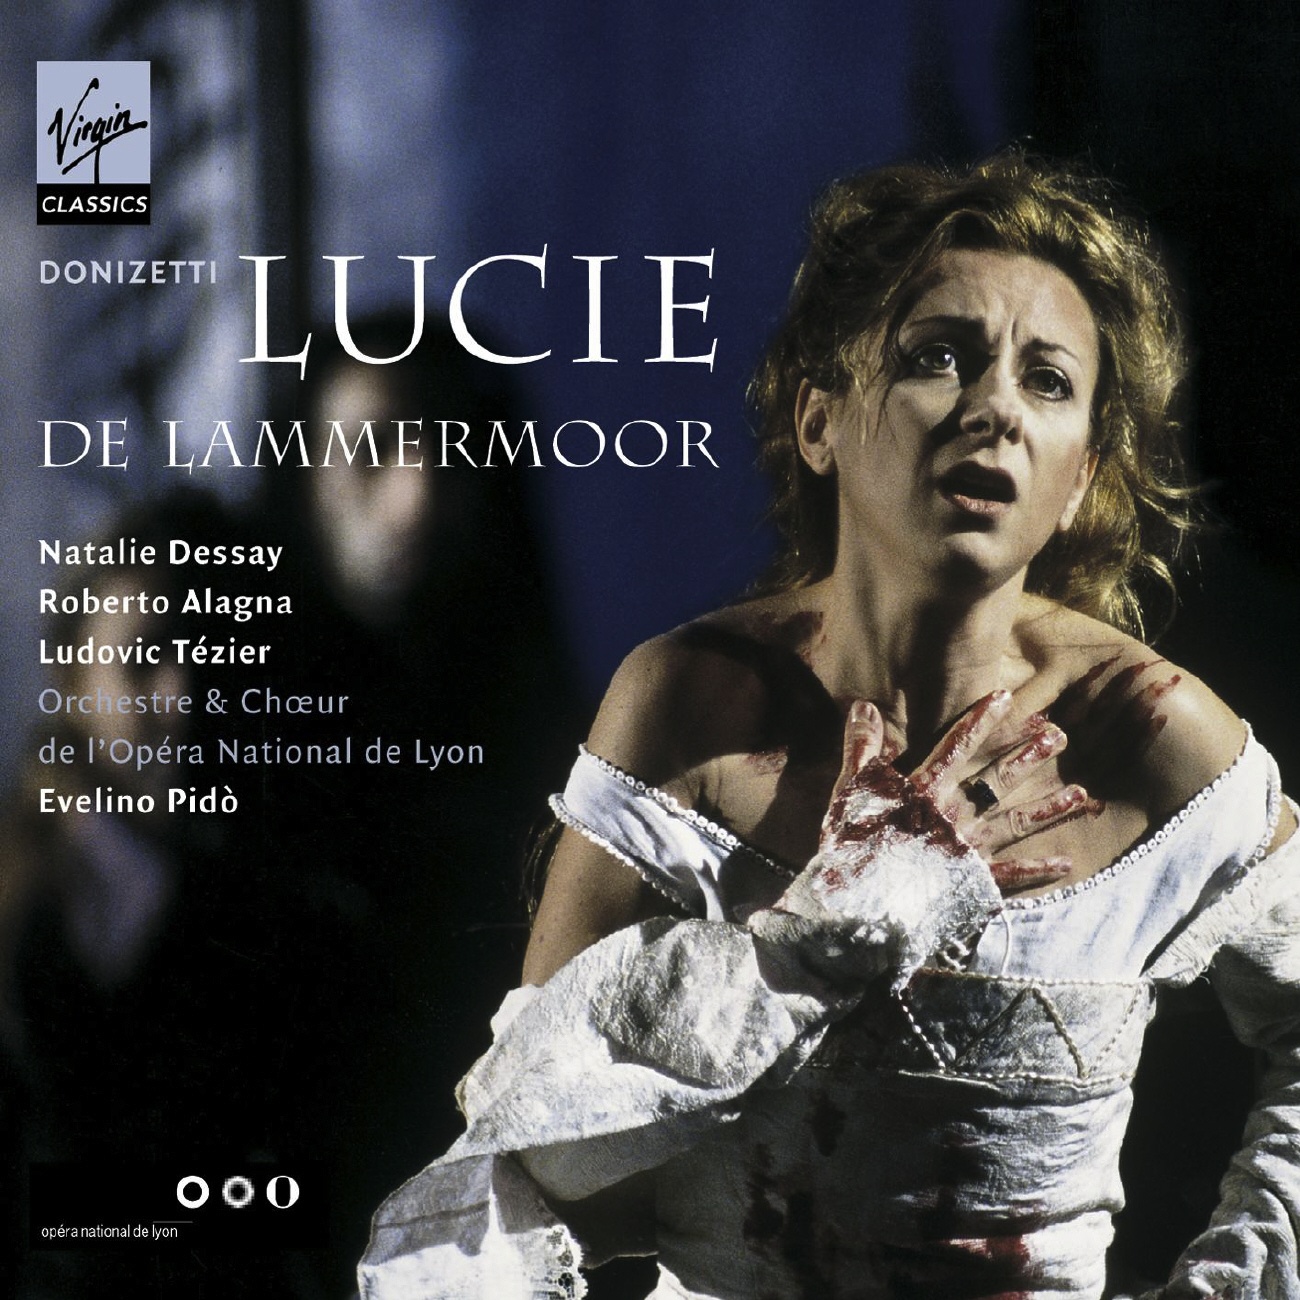 Lucie de Lammermoor, Act I: Que n'avons nous des alies (Lucie)